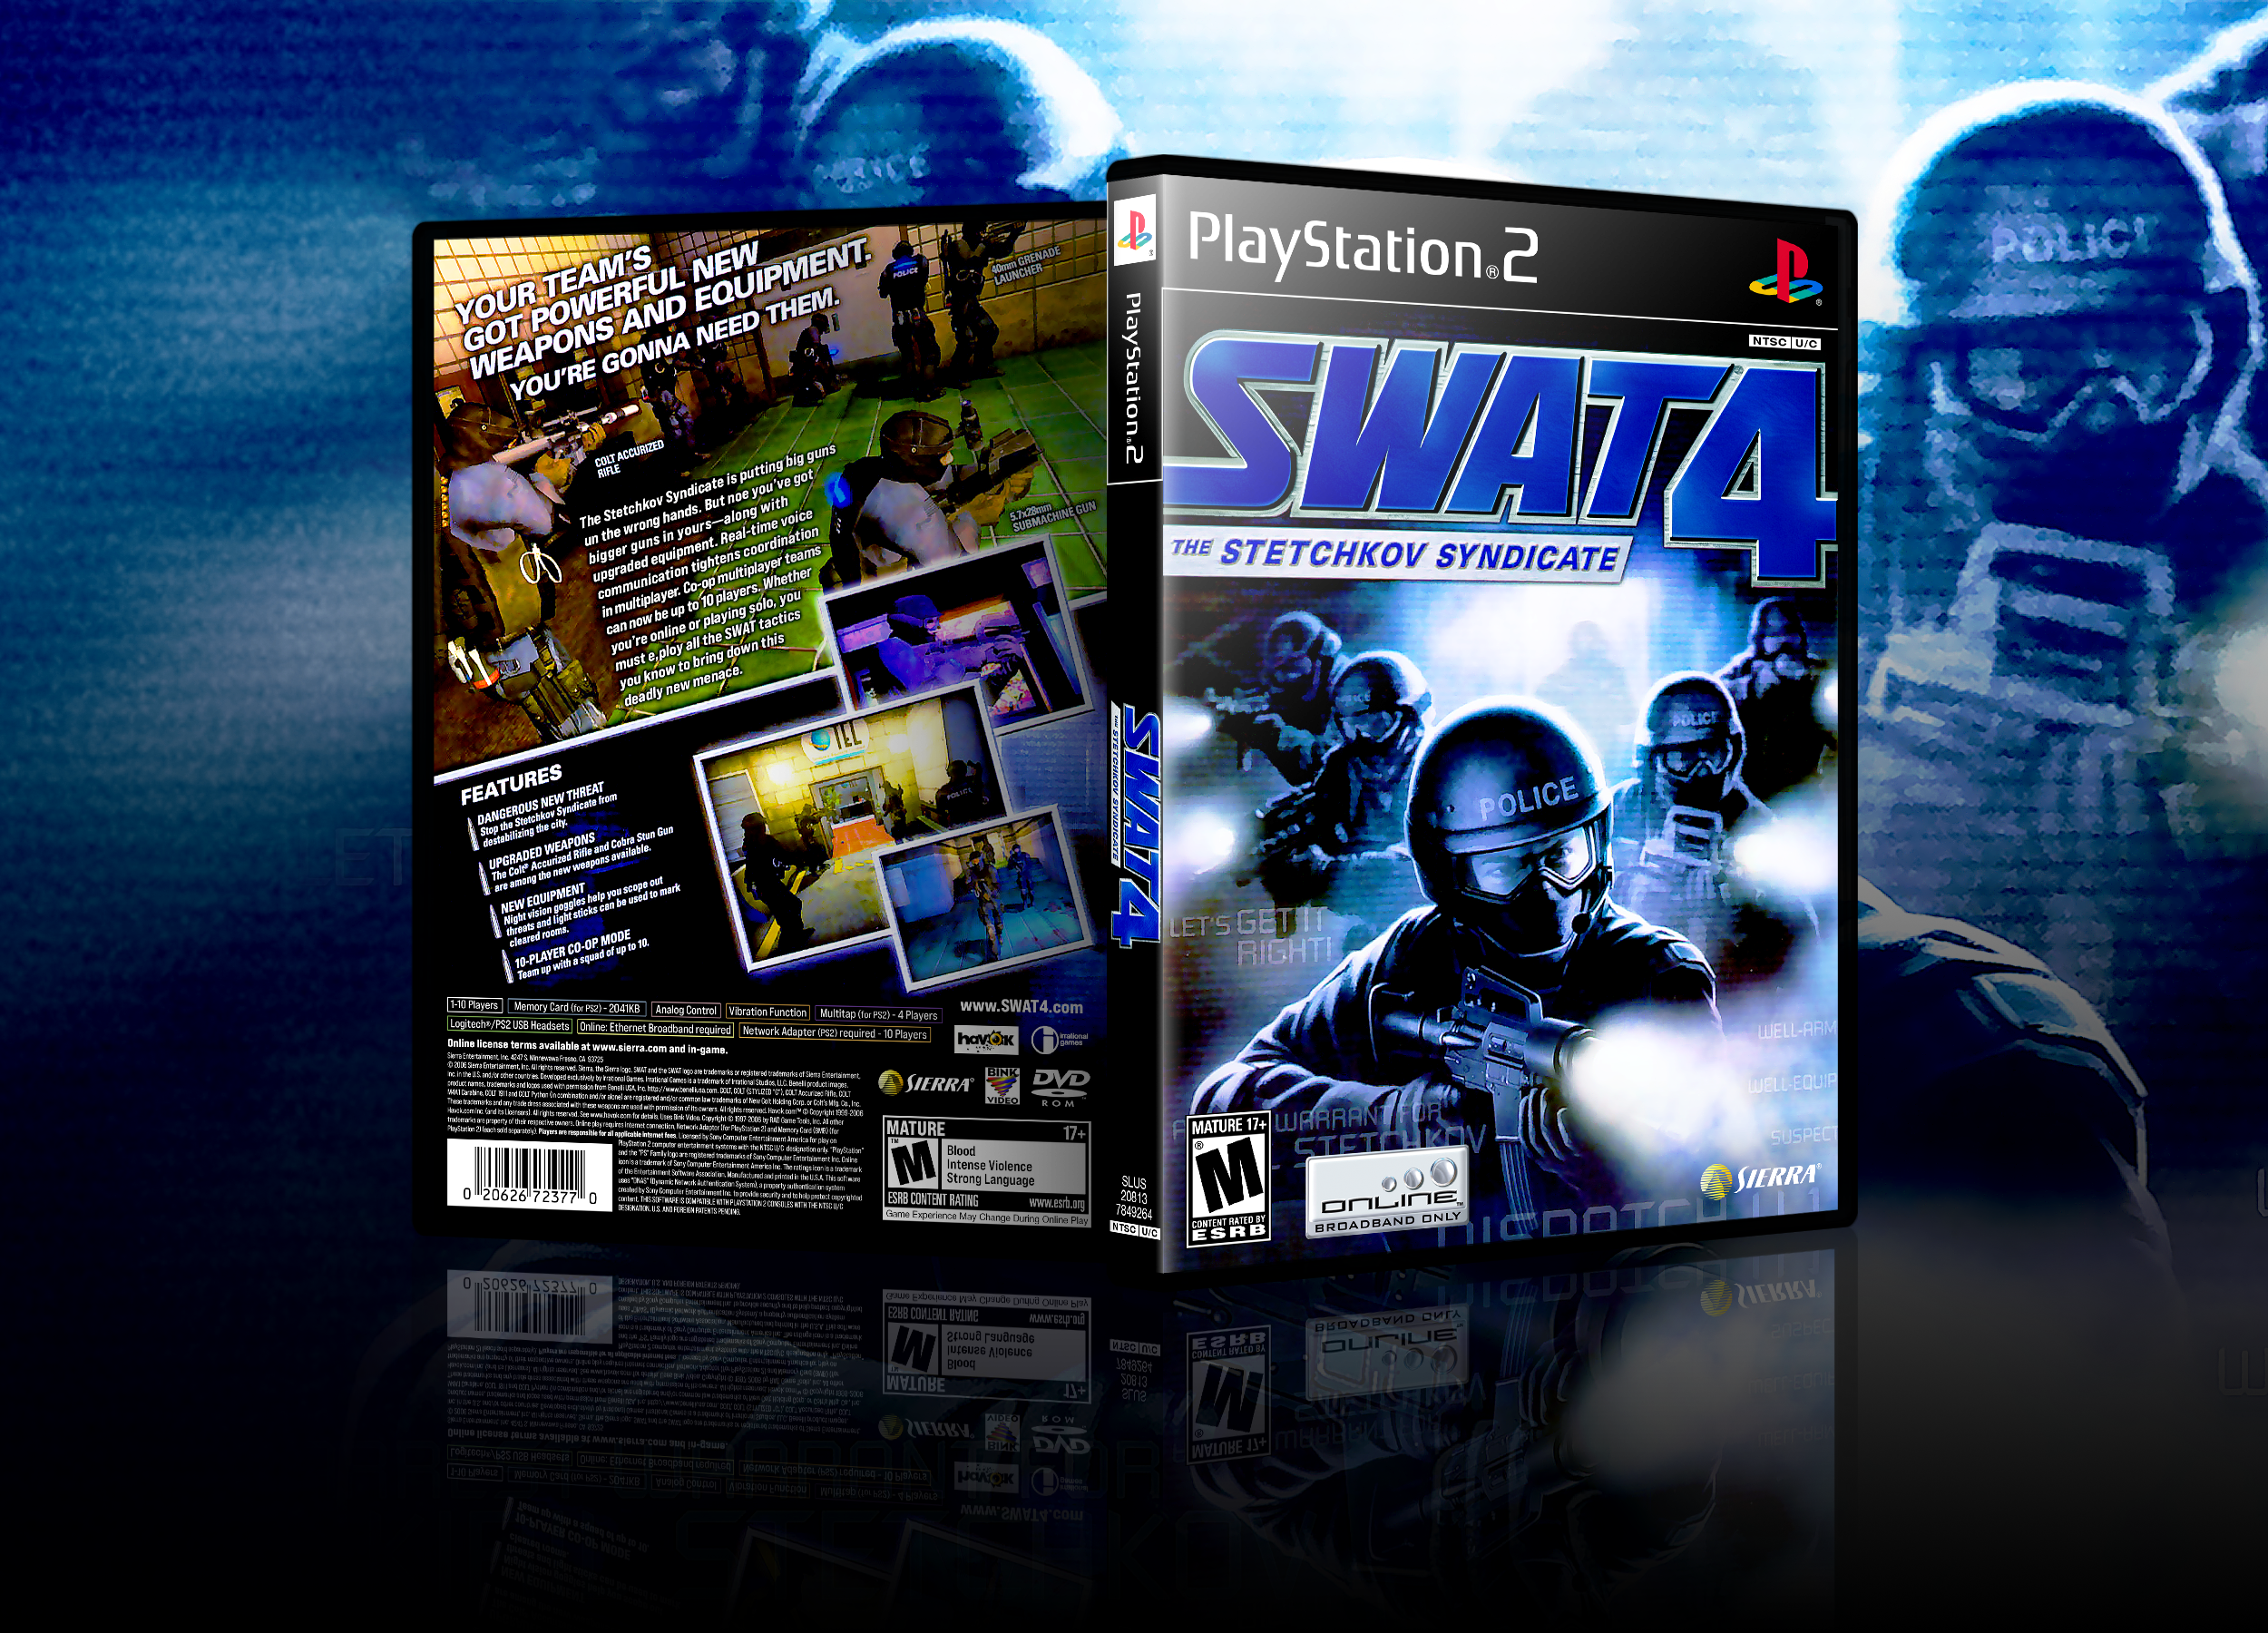 SWAT 4: The Stetchkov Syndicate box cover